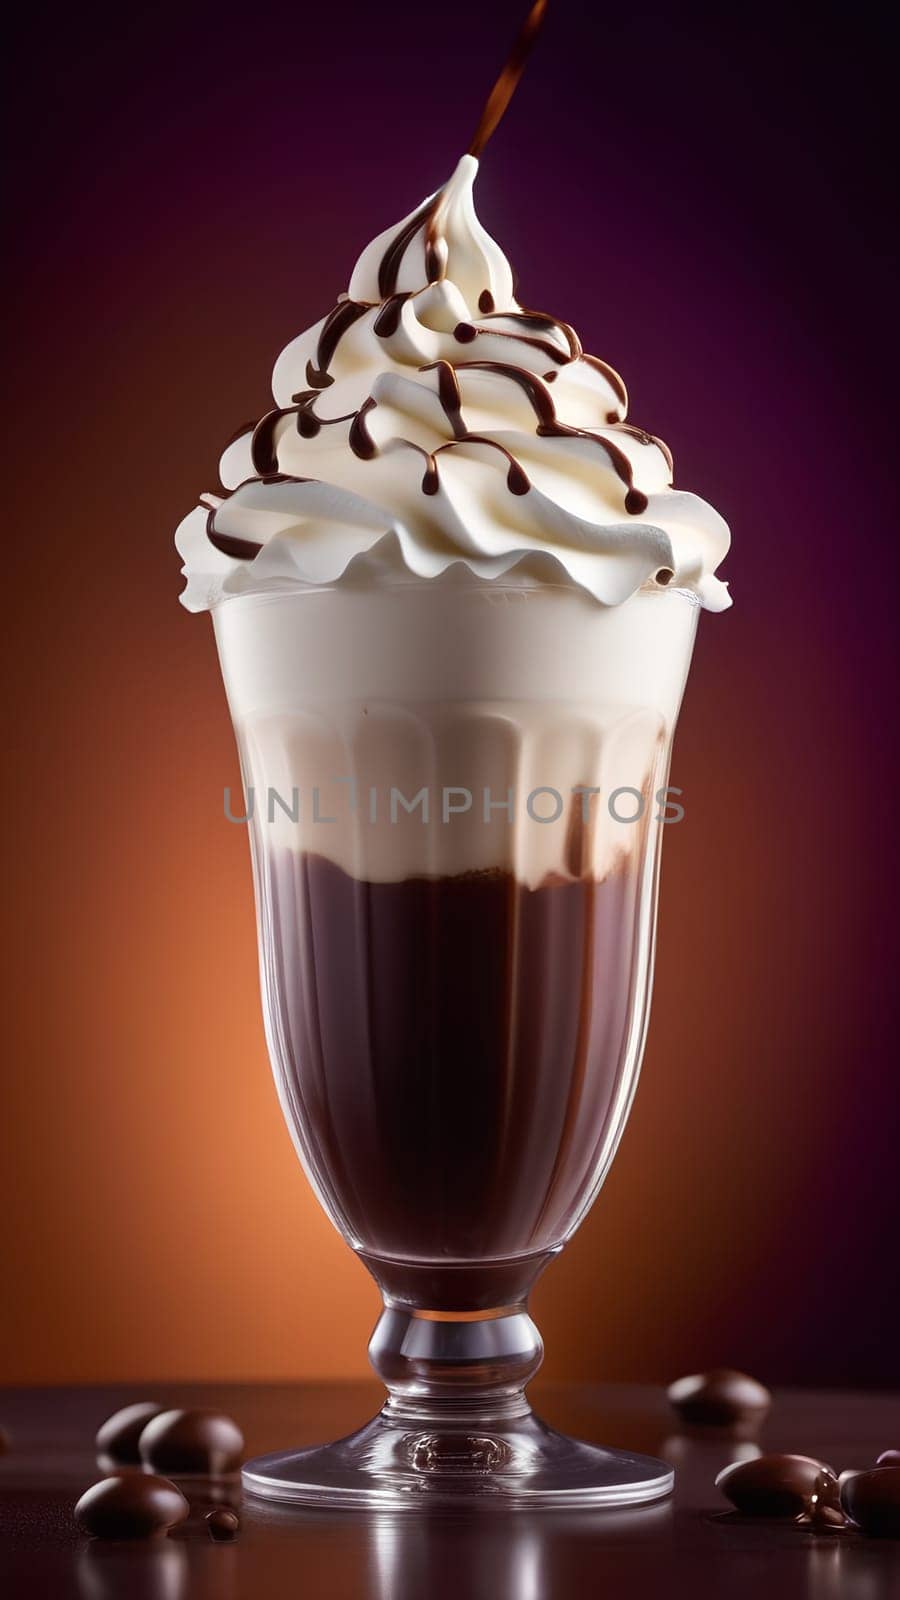 Milkshake with chocolate on a brown background by Севостьянов